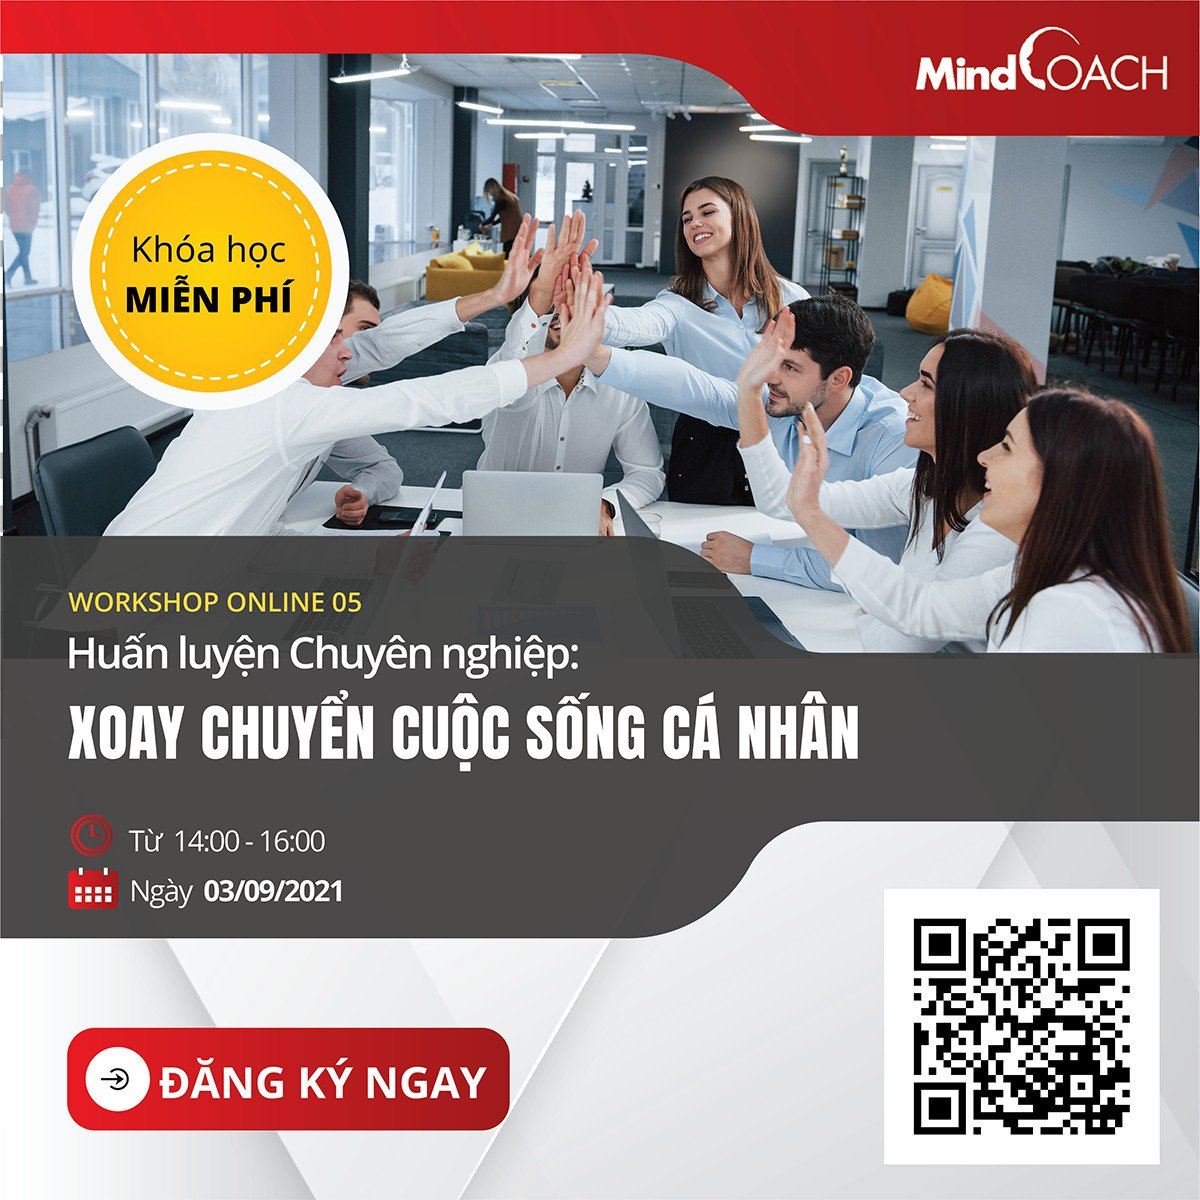 MindCoach_Workshop-Online-Professional-Coaching05_030921.jpg